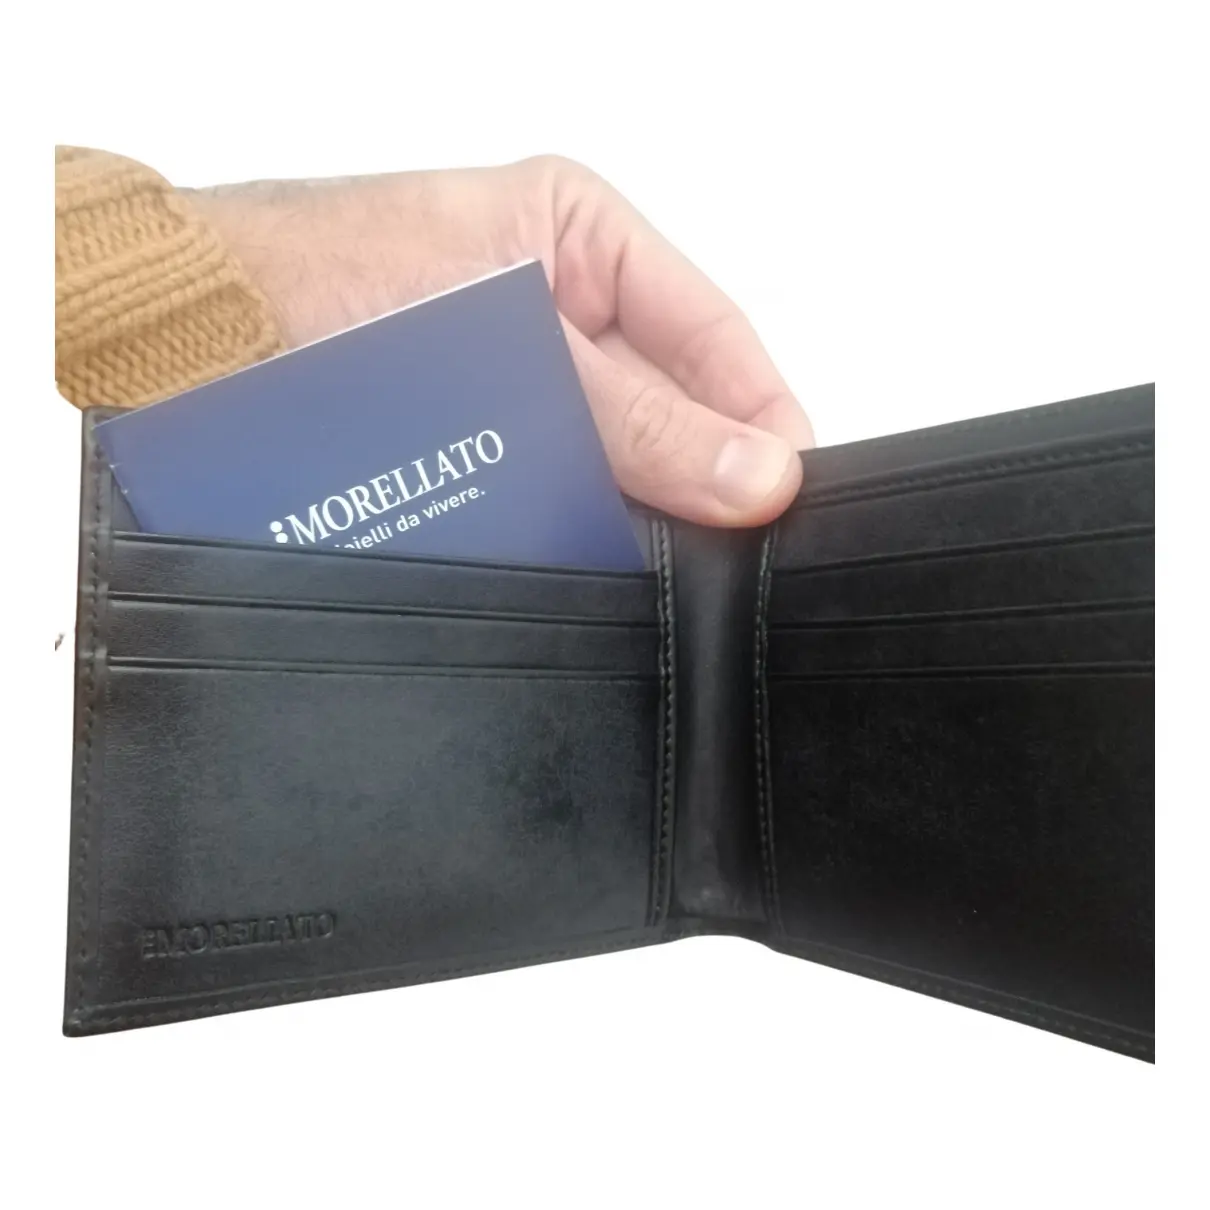 Buy MORELLATO Leather small bag online